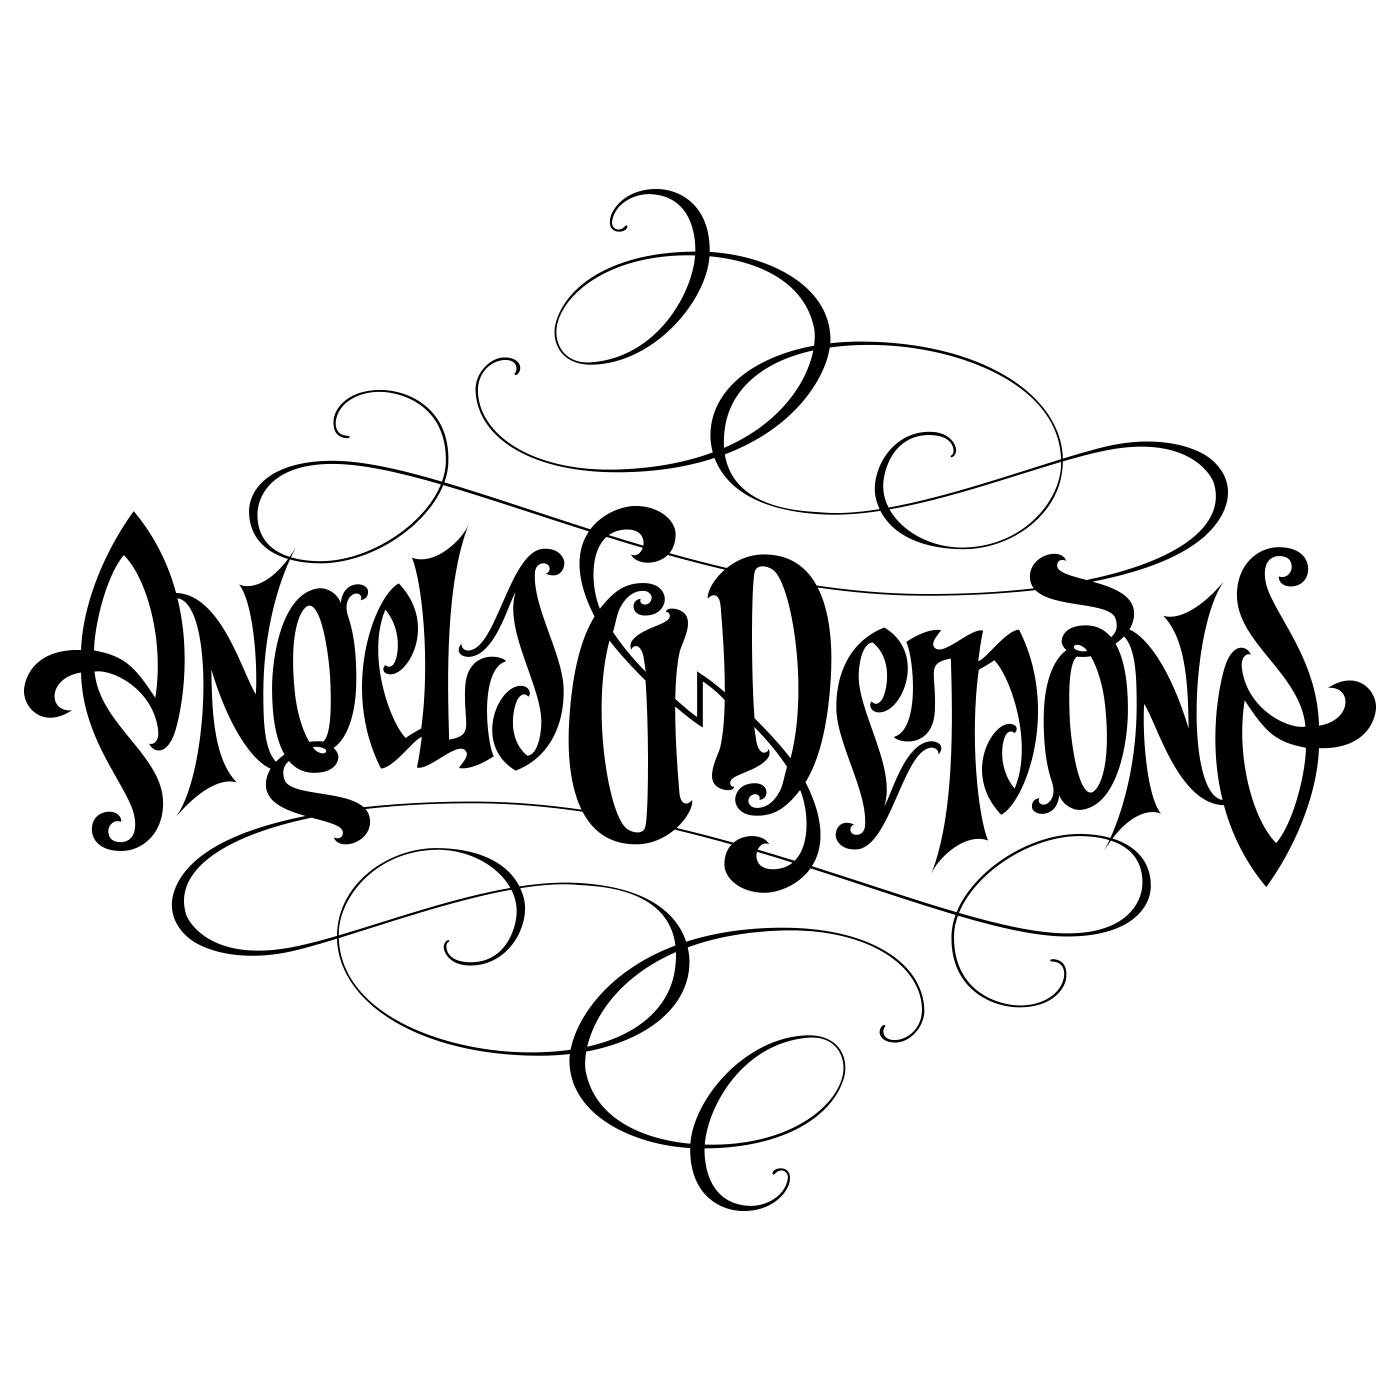 Angels & Demons (Robert Langdon, #1) by Dan Brown